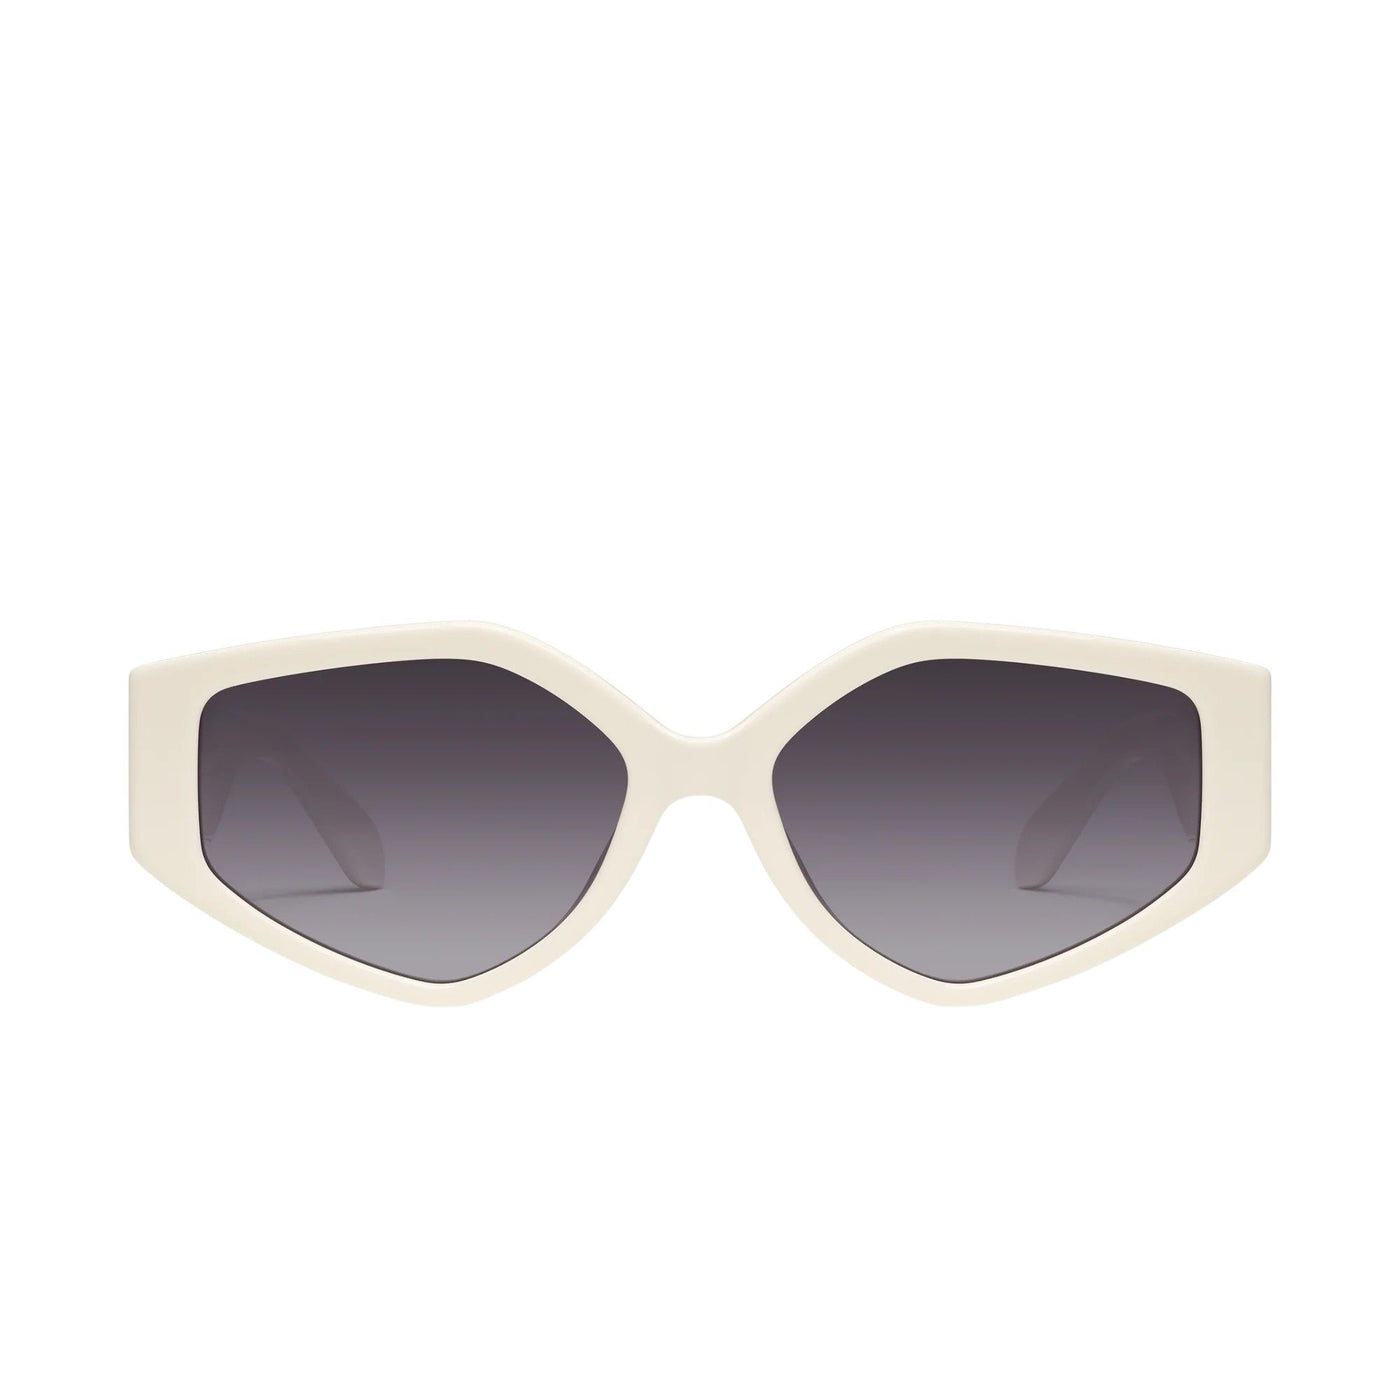 Quay Women's Hot Gossip Geometric Cat Eye Sunglasses (Bone Frame/Smoke Lens) - front